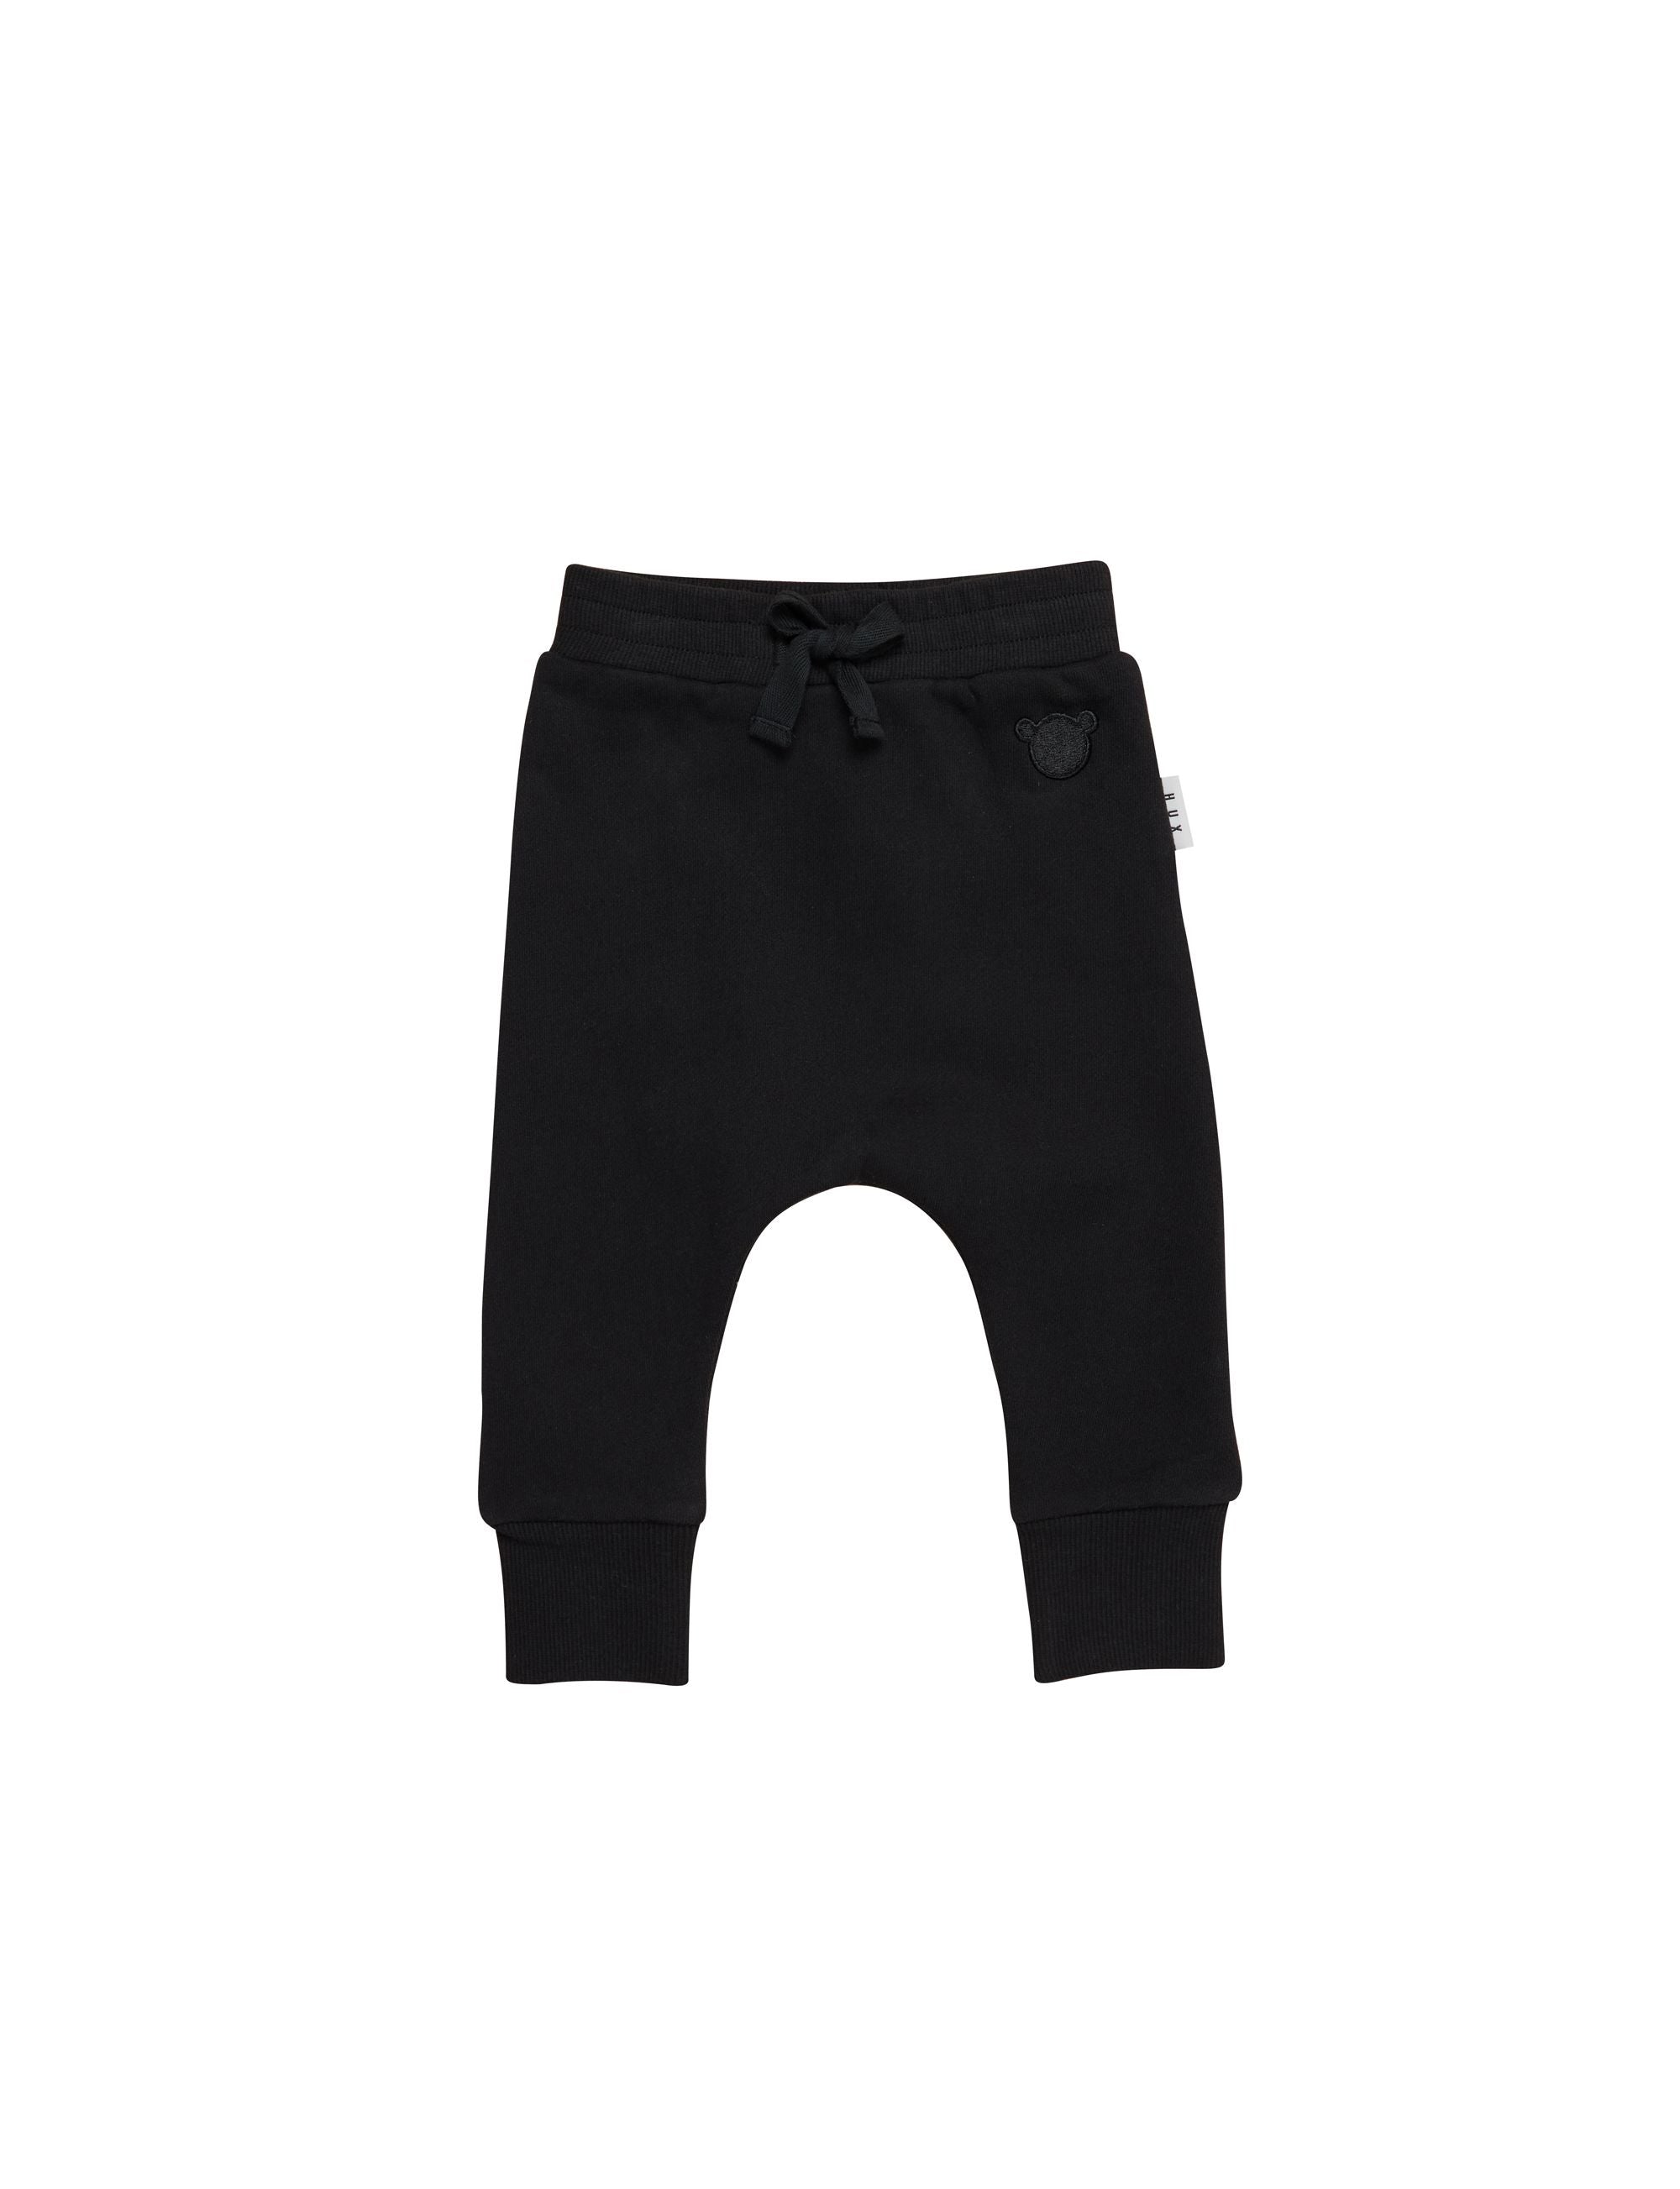 Huxbaby Boys Pants Black Fleece Drop Crotch Pant